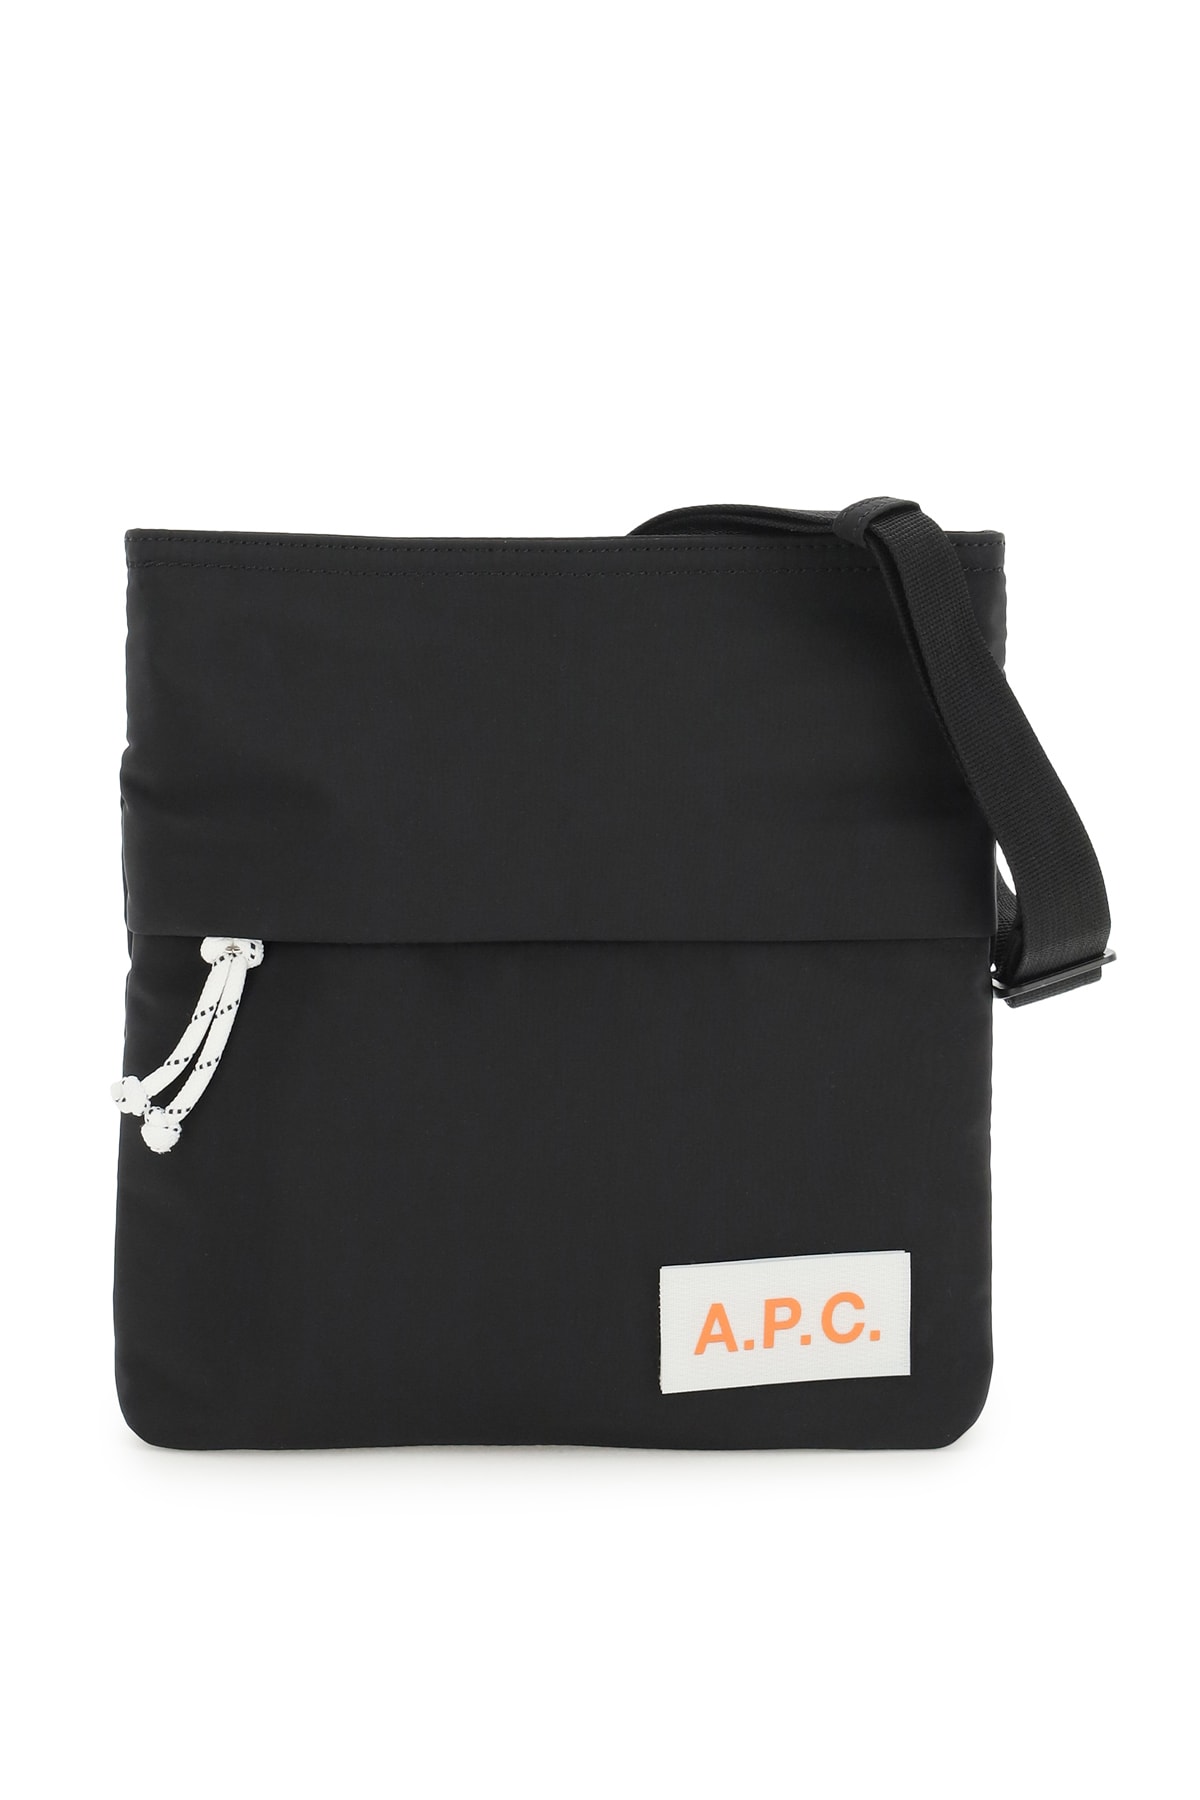 A.P.C. Crossbody Bag Protection